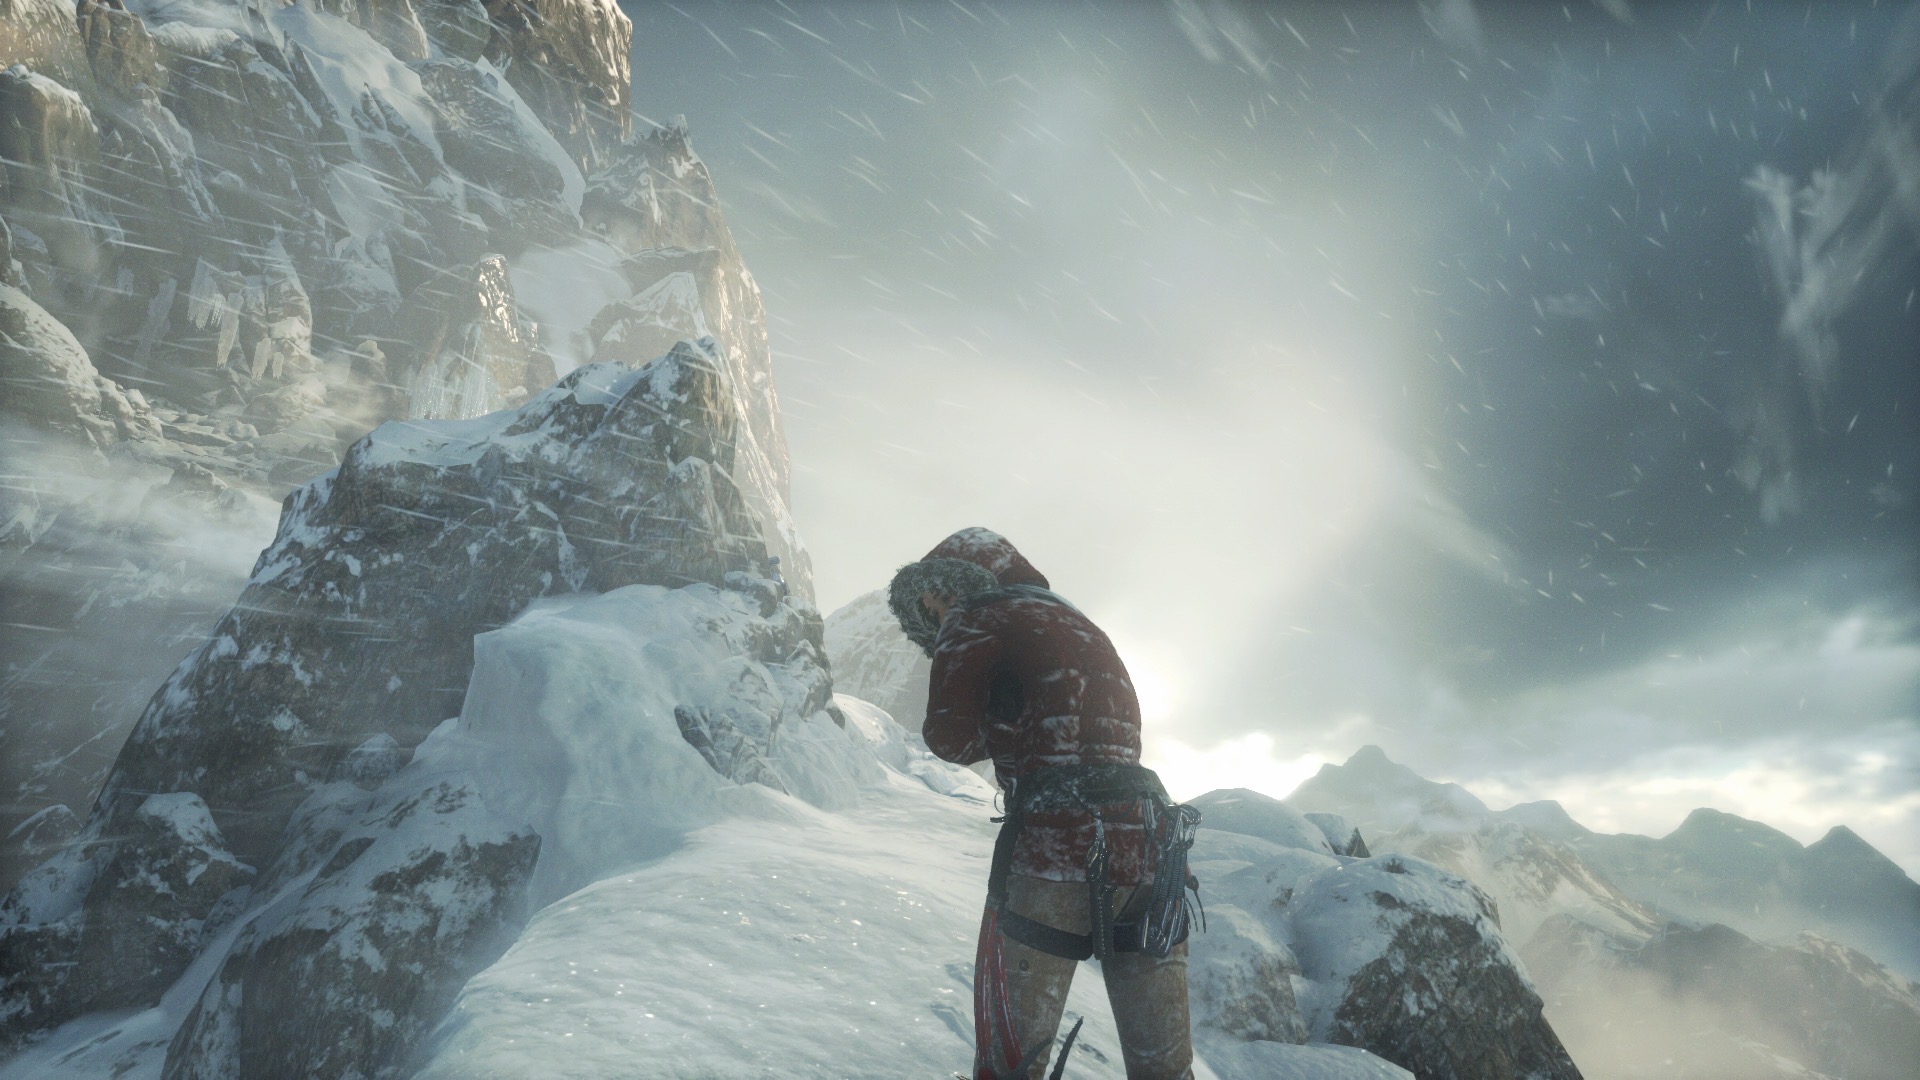 Lara in a snowstorm